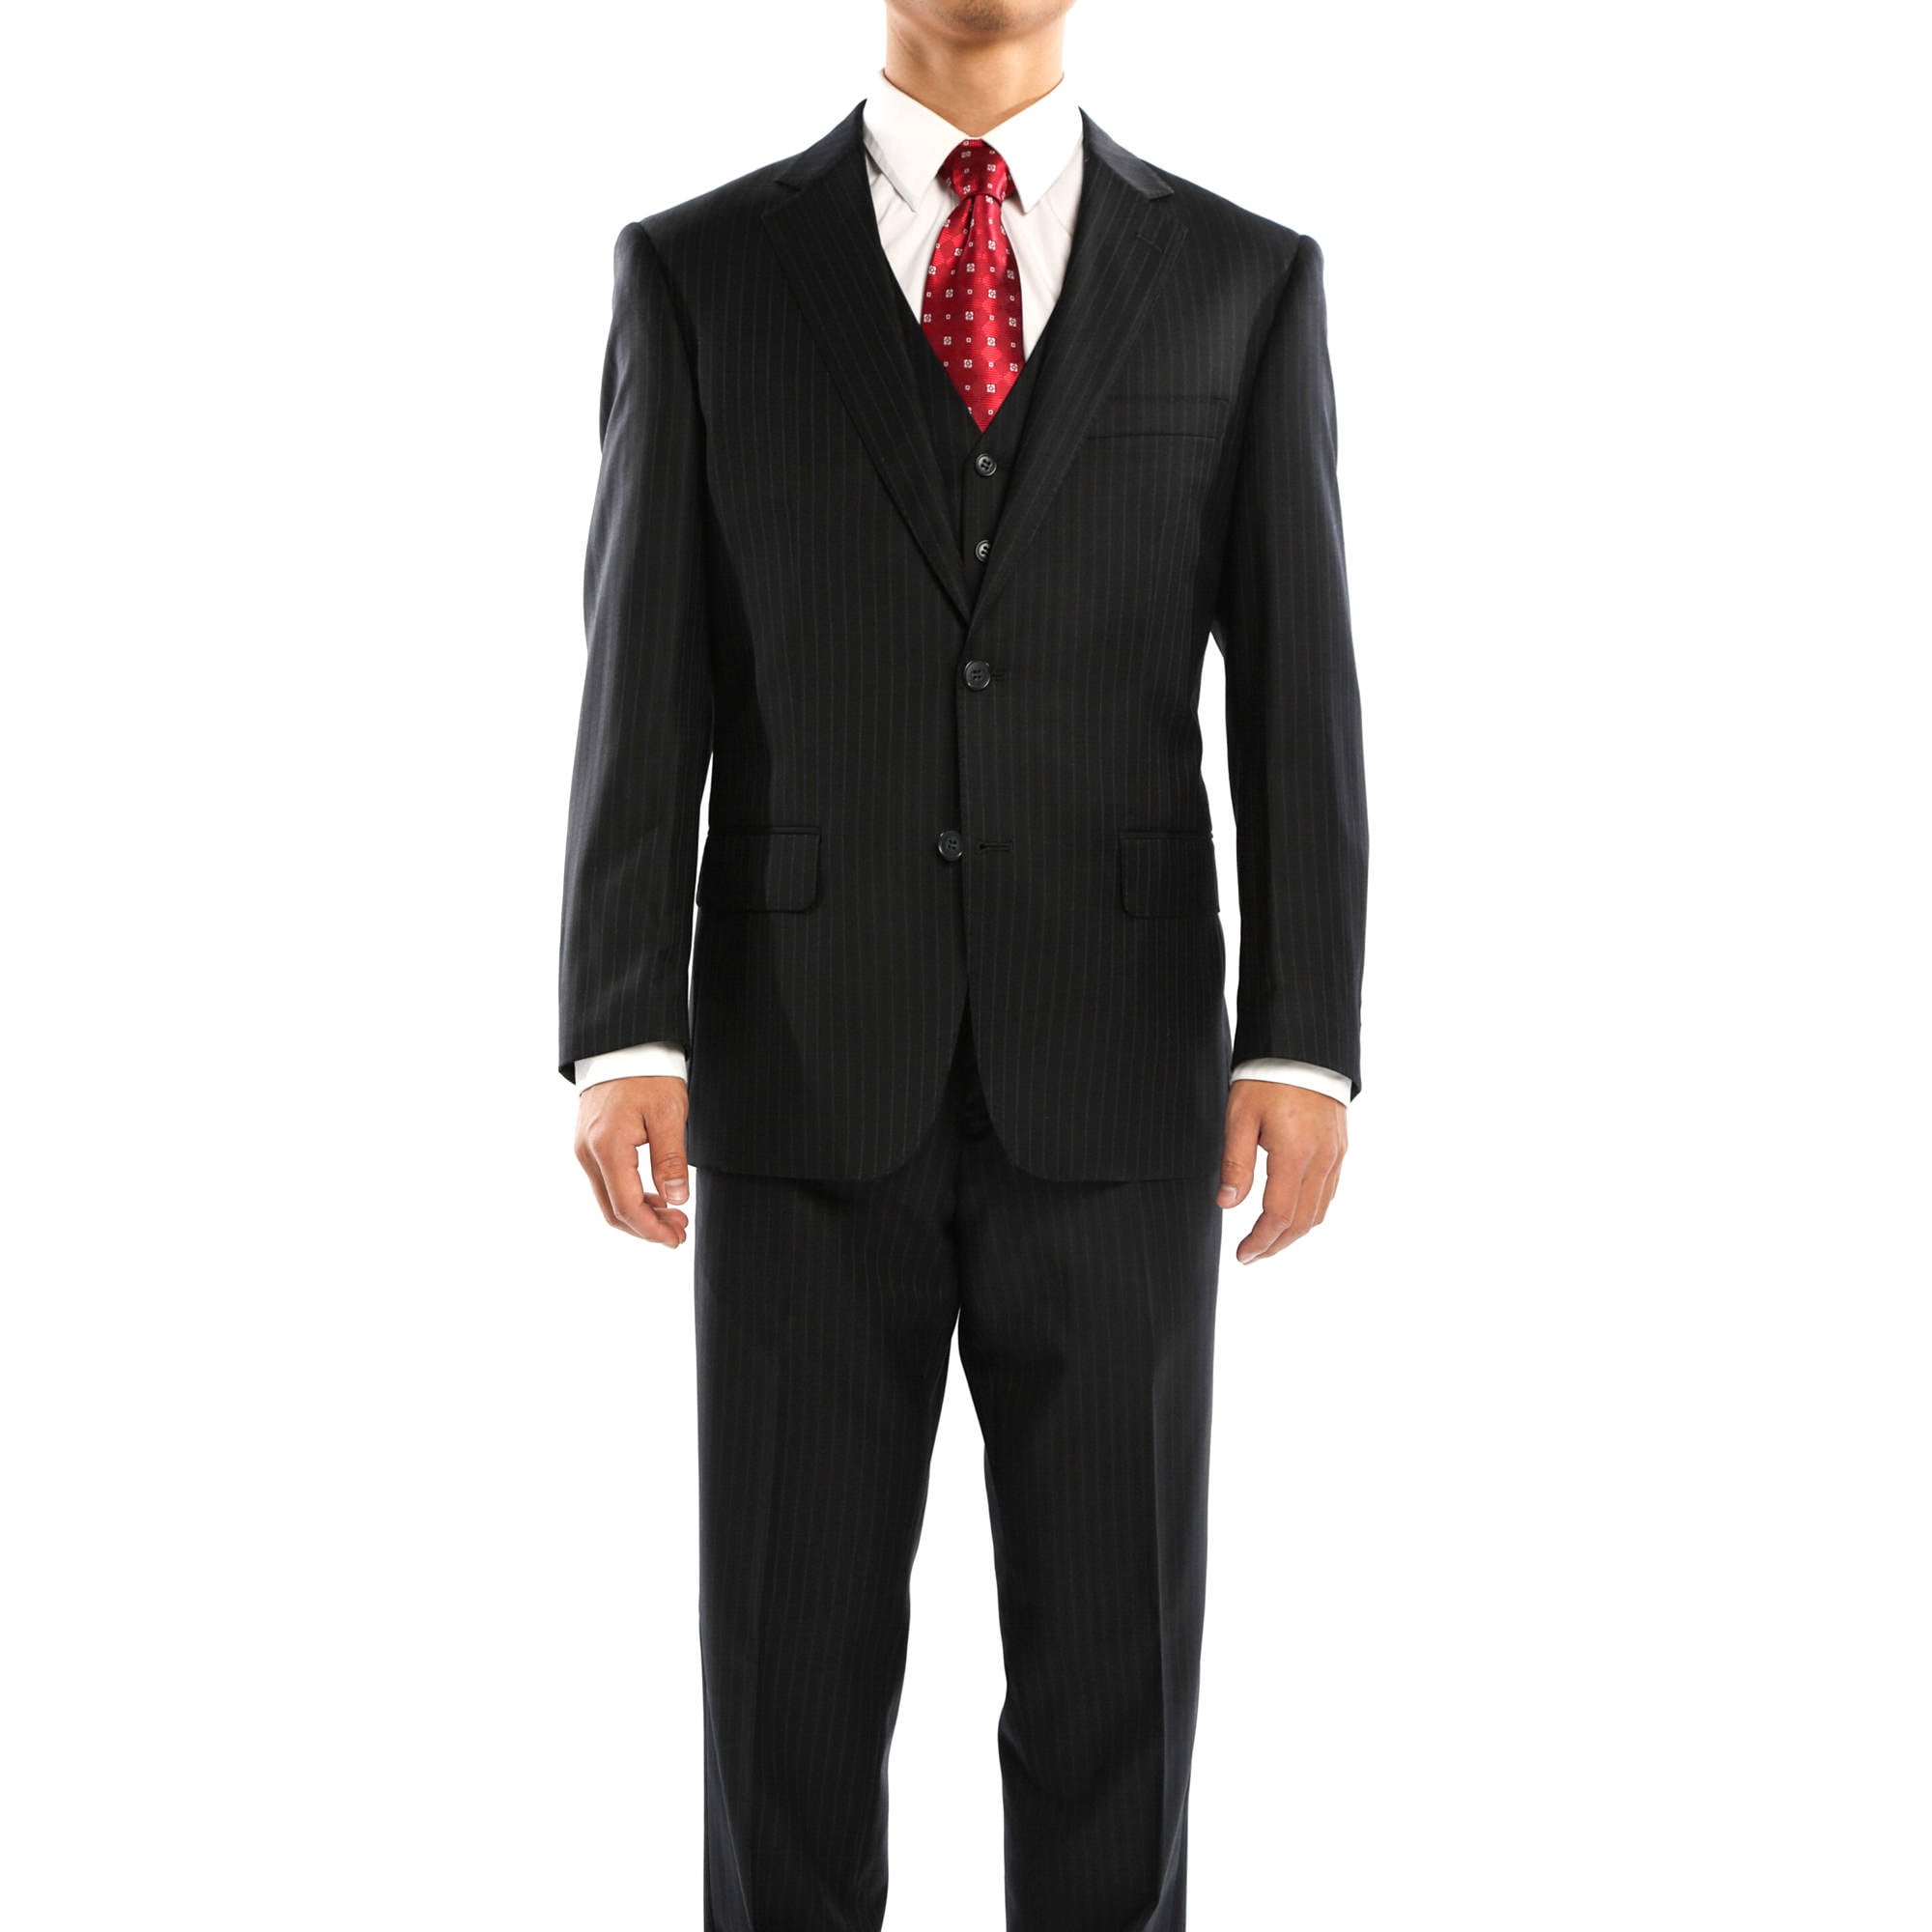 Big Men's Black and Blue Pinstripe Three Piece Wool Suit, 50R